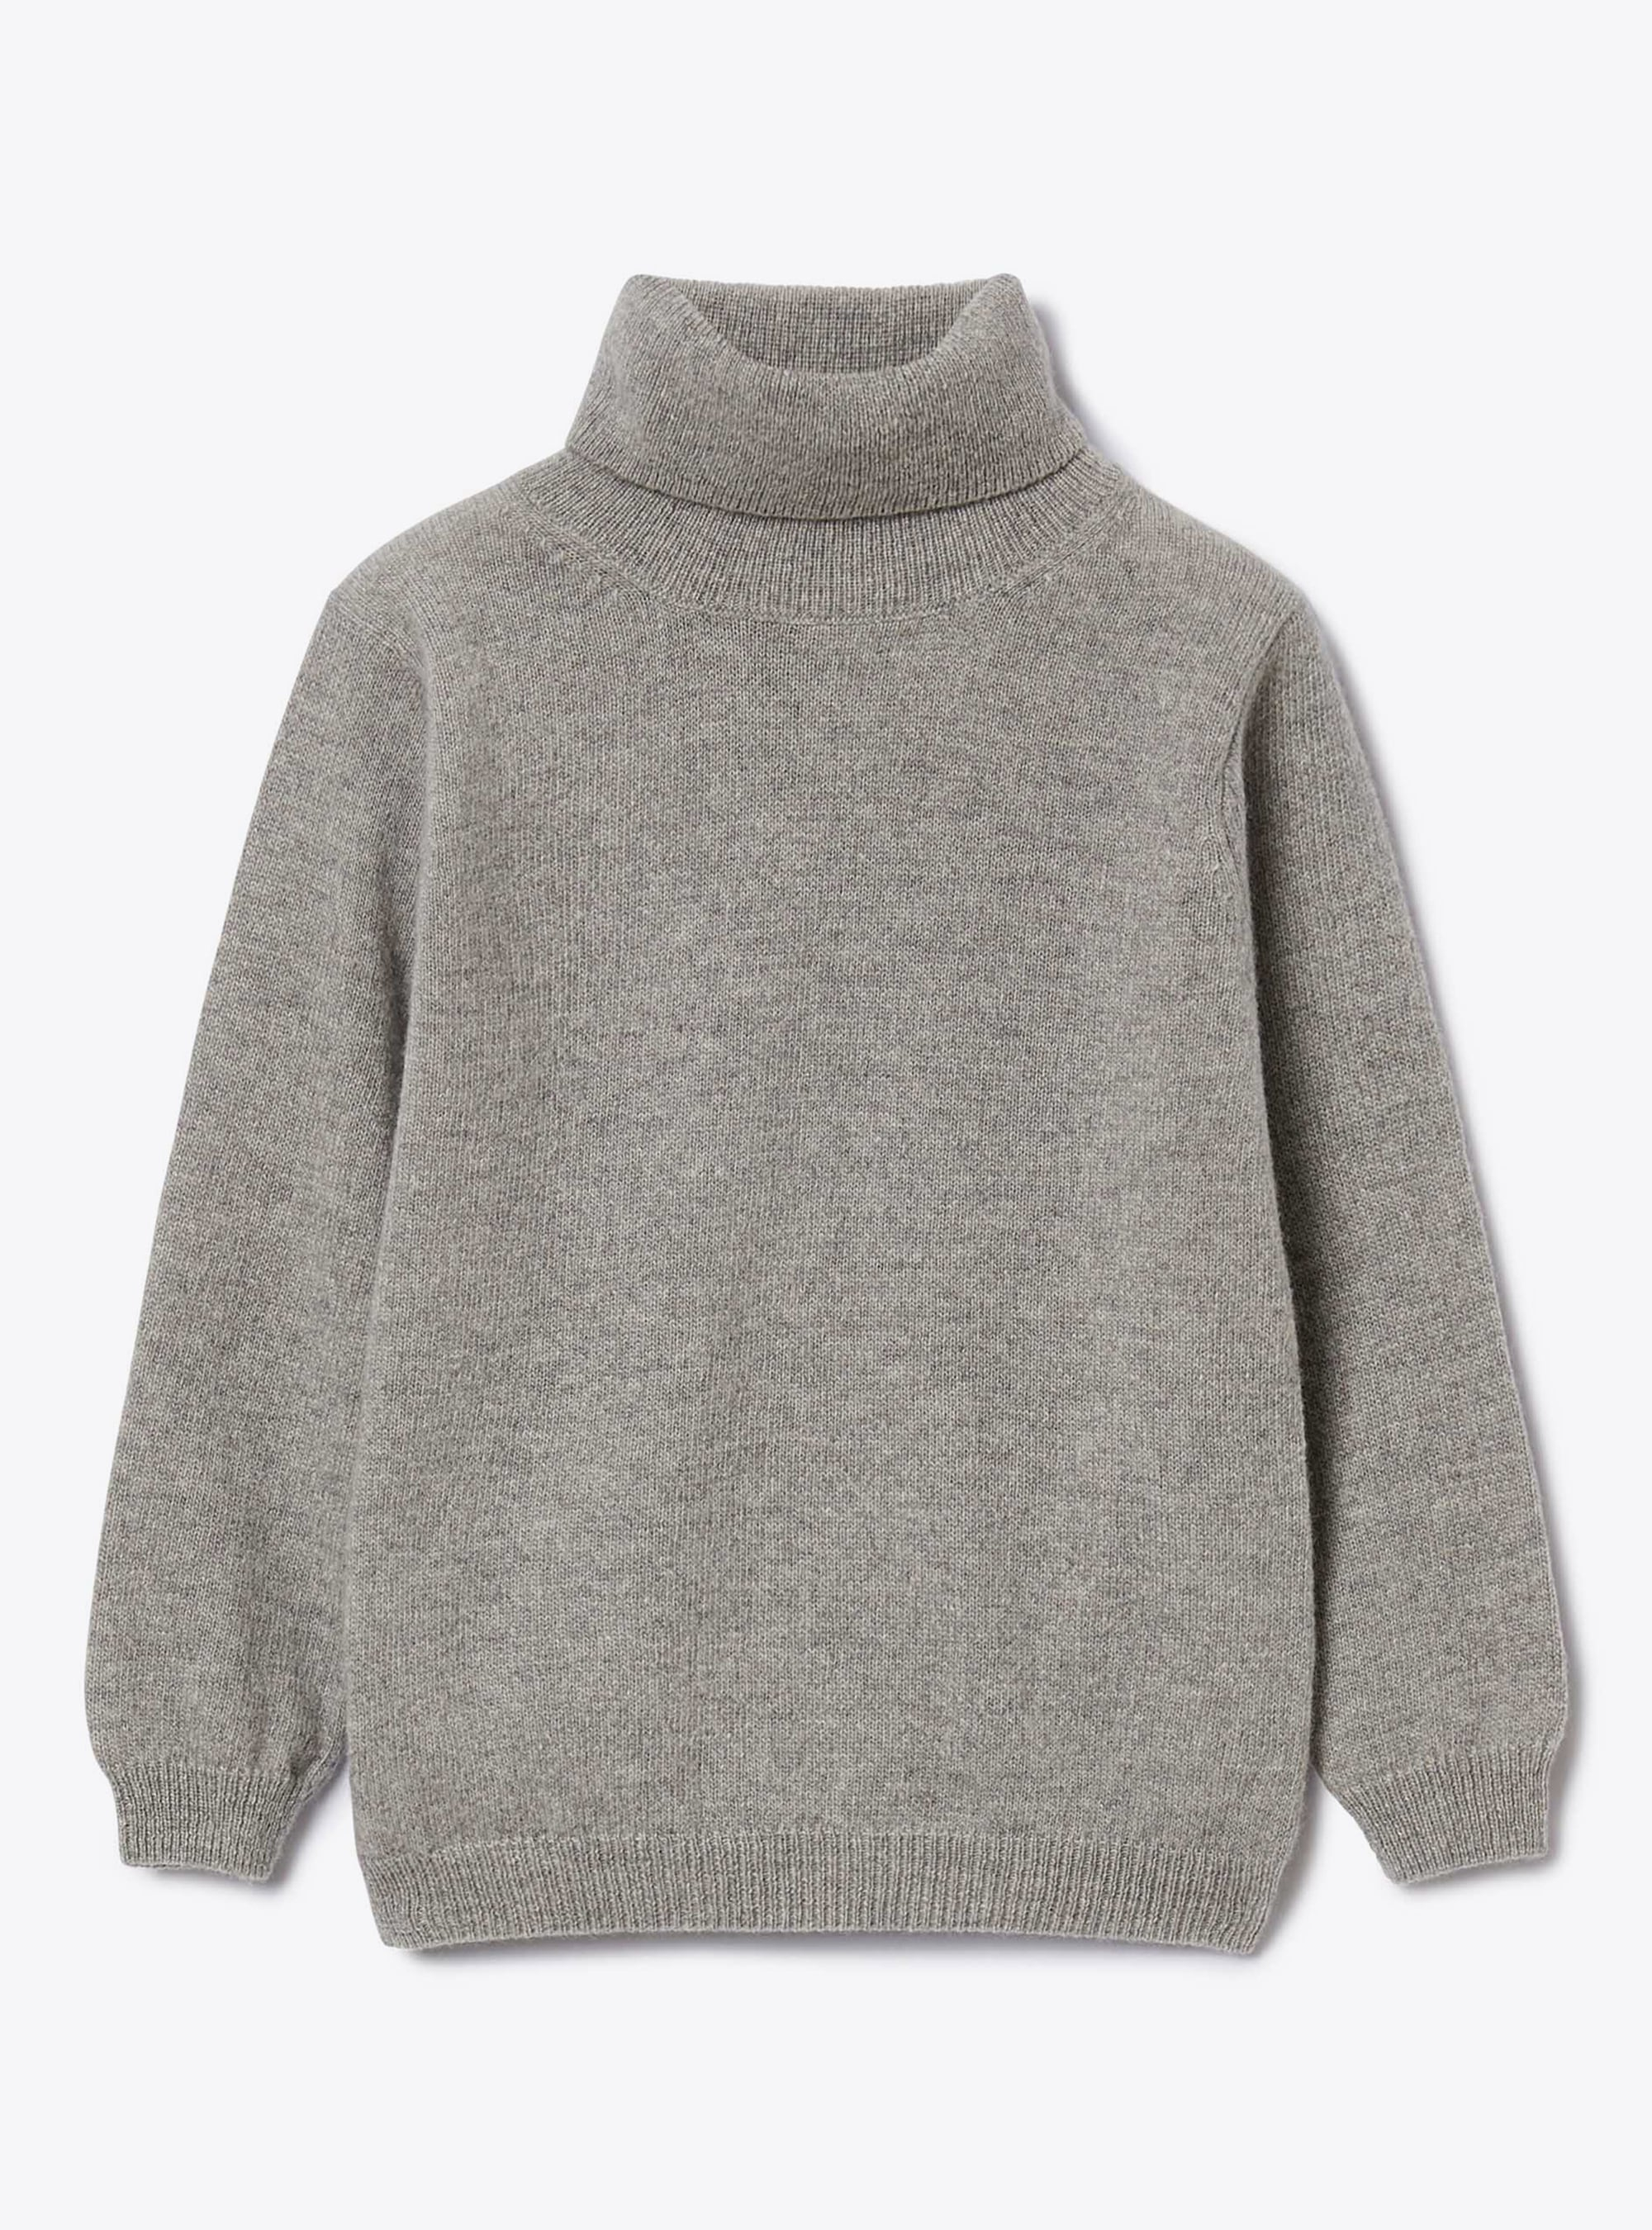 Grey merino wool turtleneck sweater - Sweaters - Il Gufo